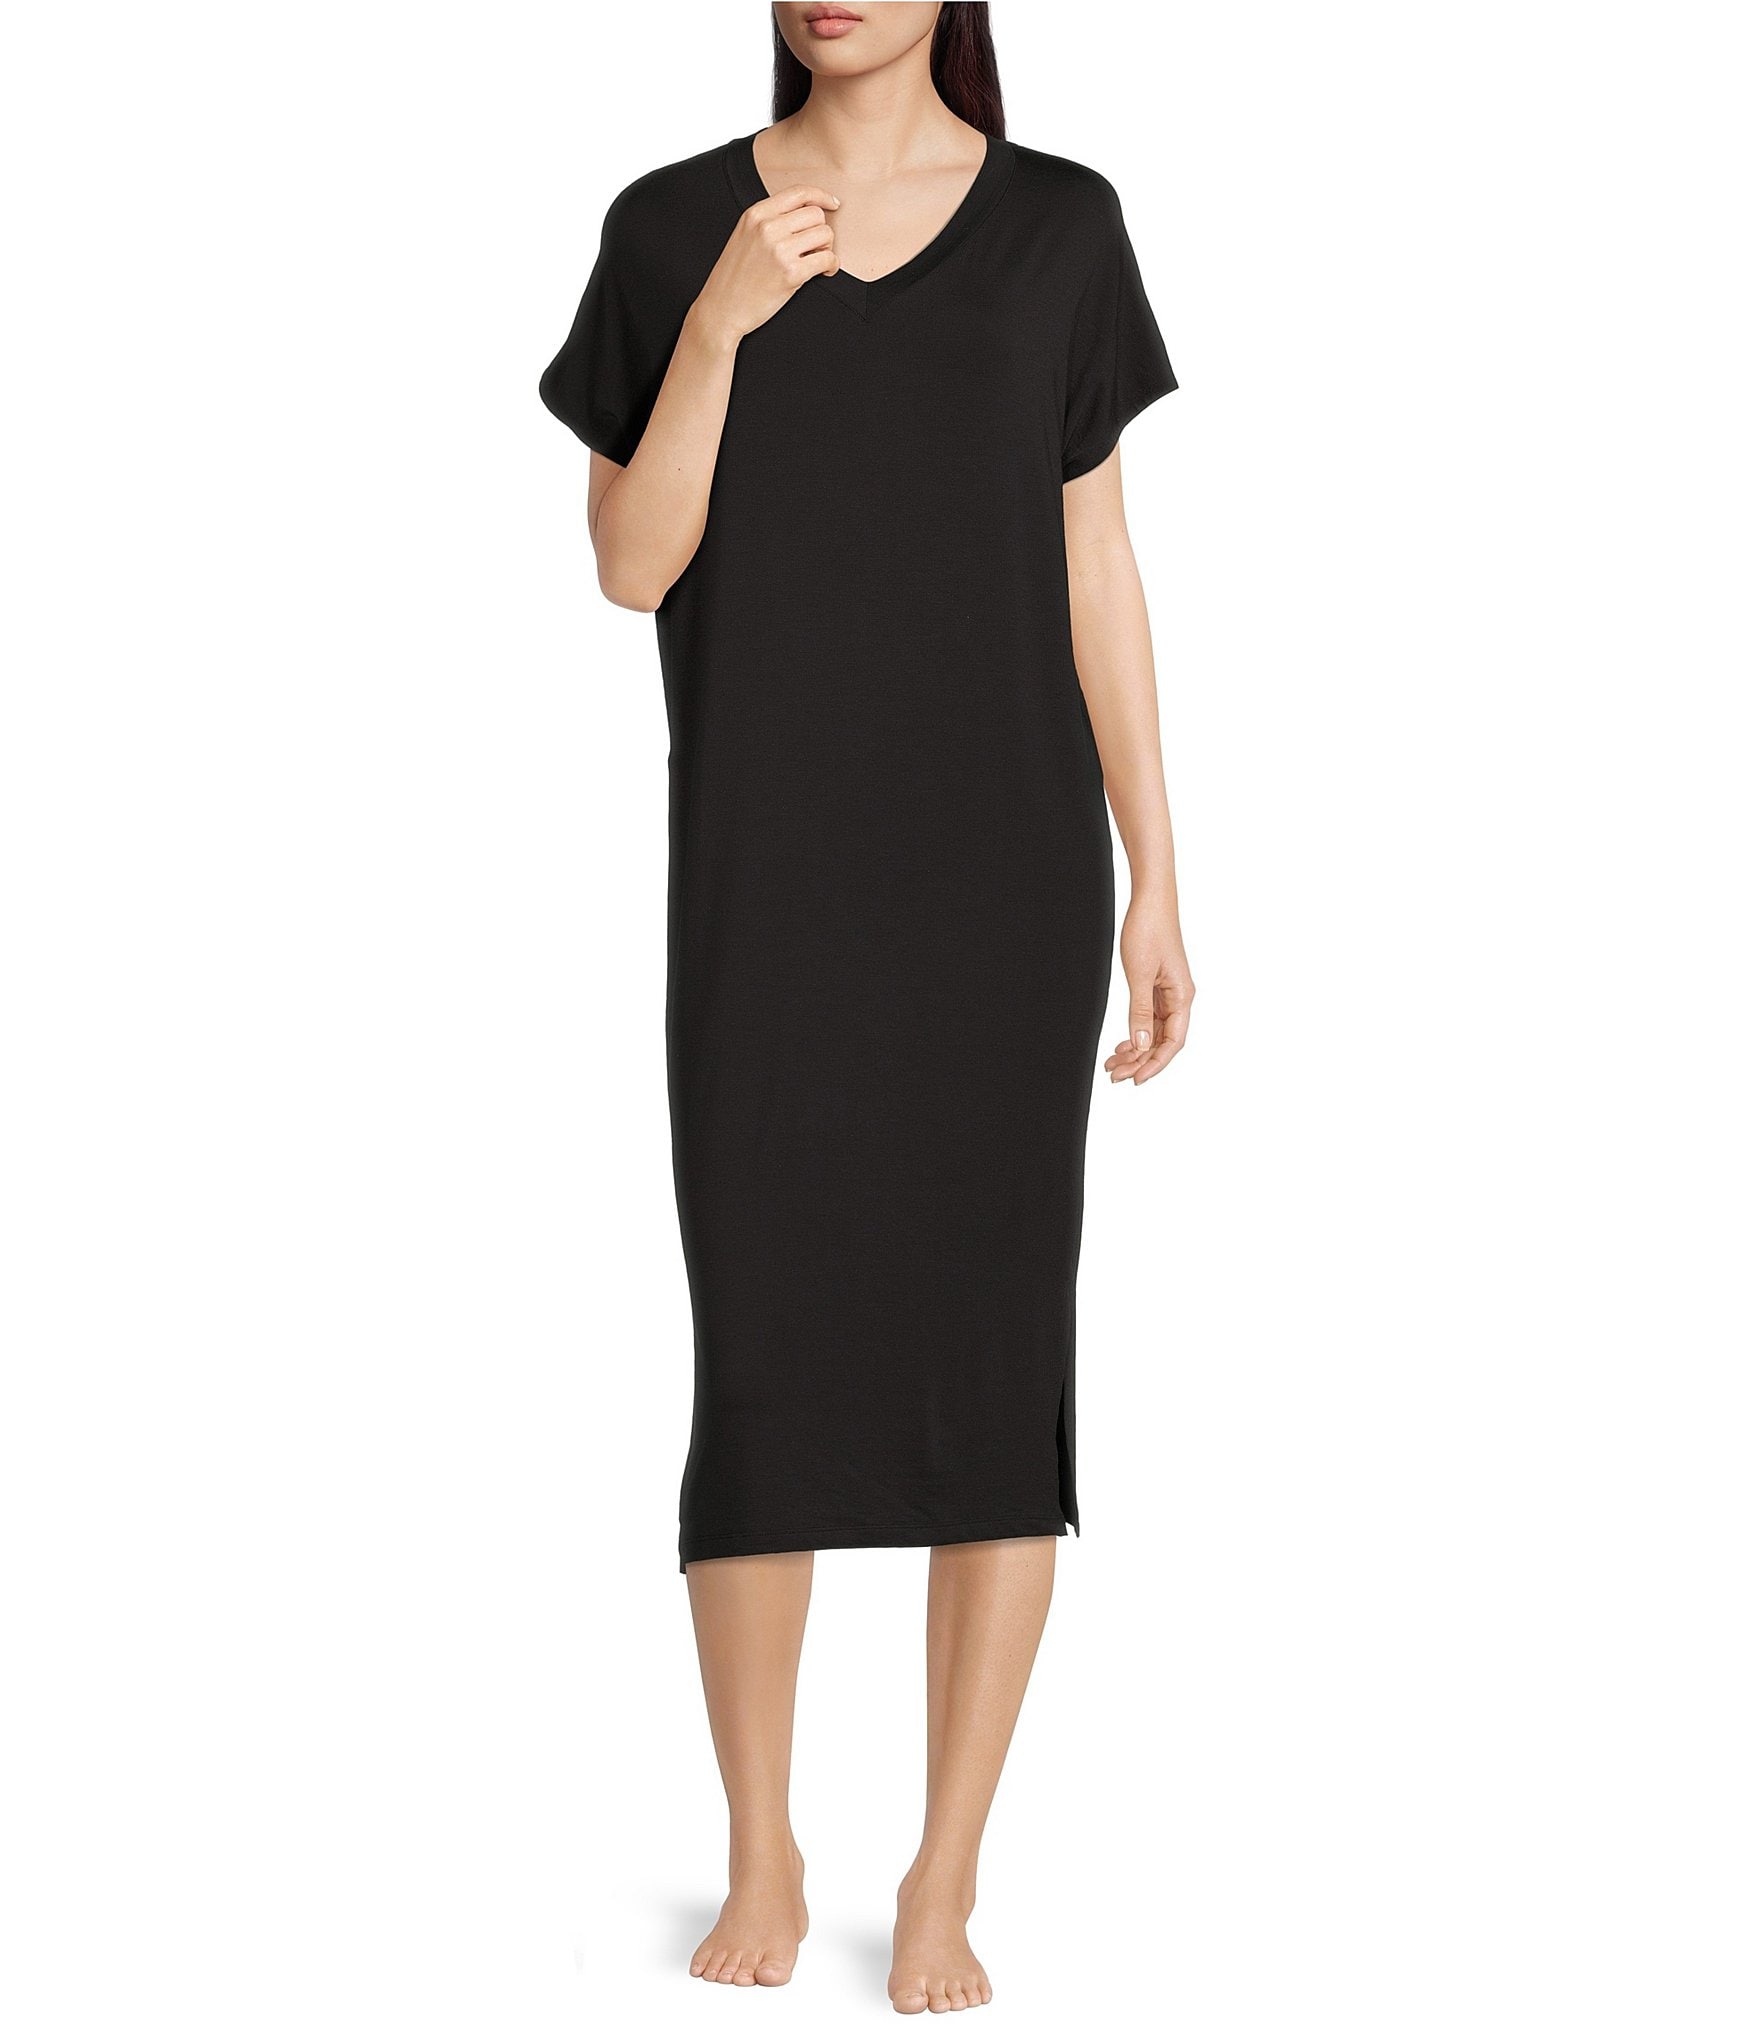 Nottibianche Black Women's Nightgowns & Nightshirts| Dillard's